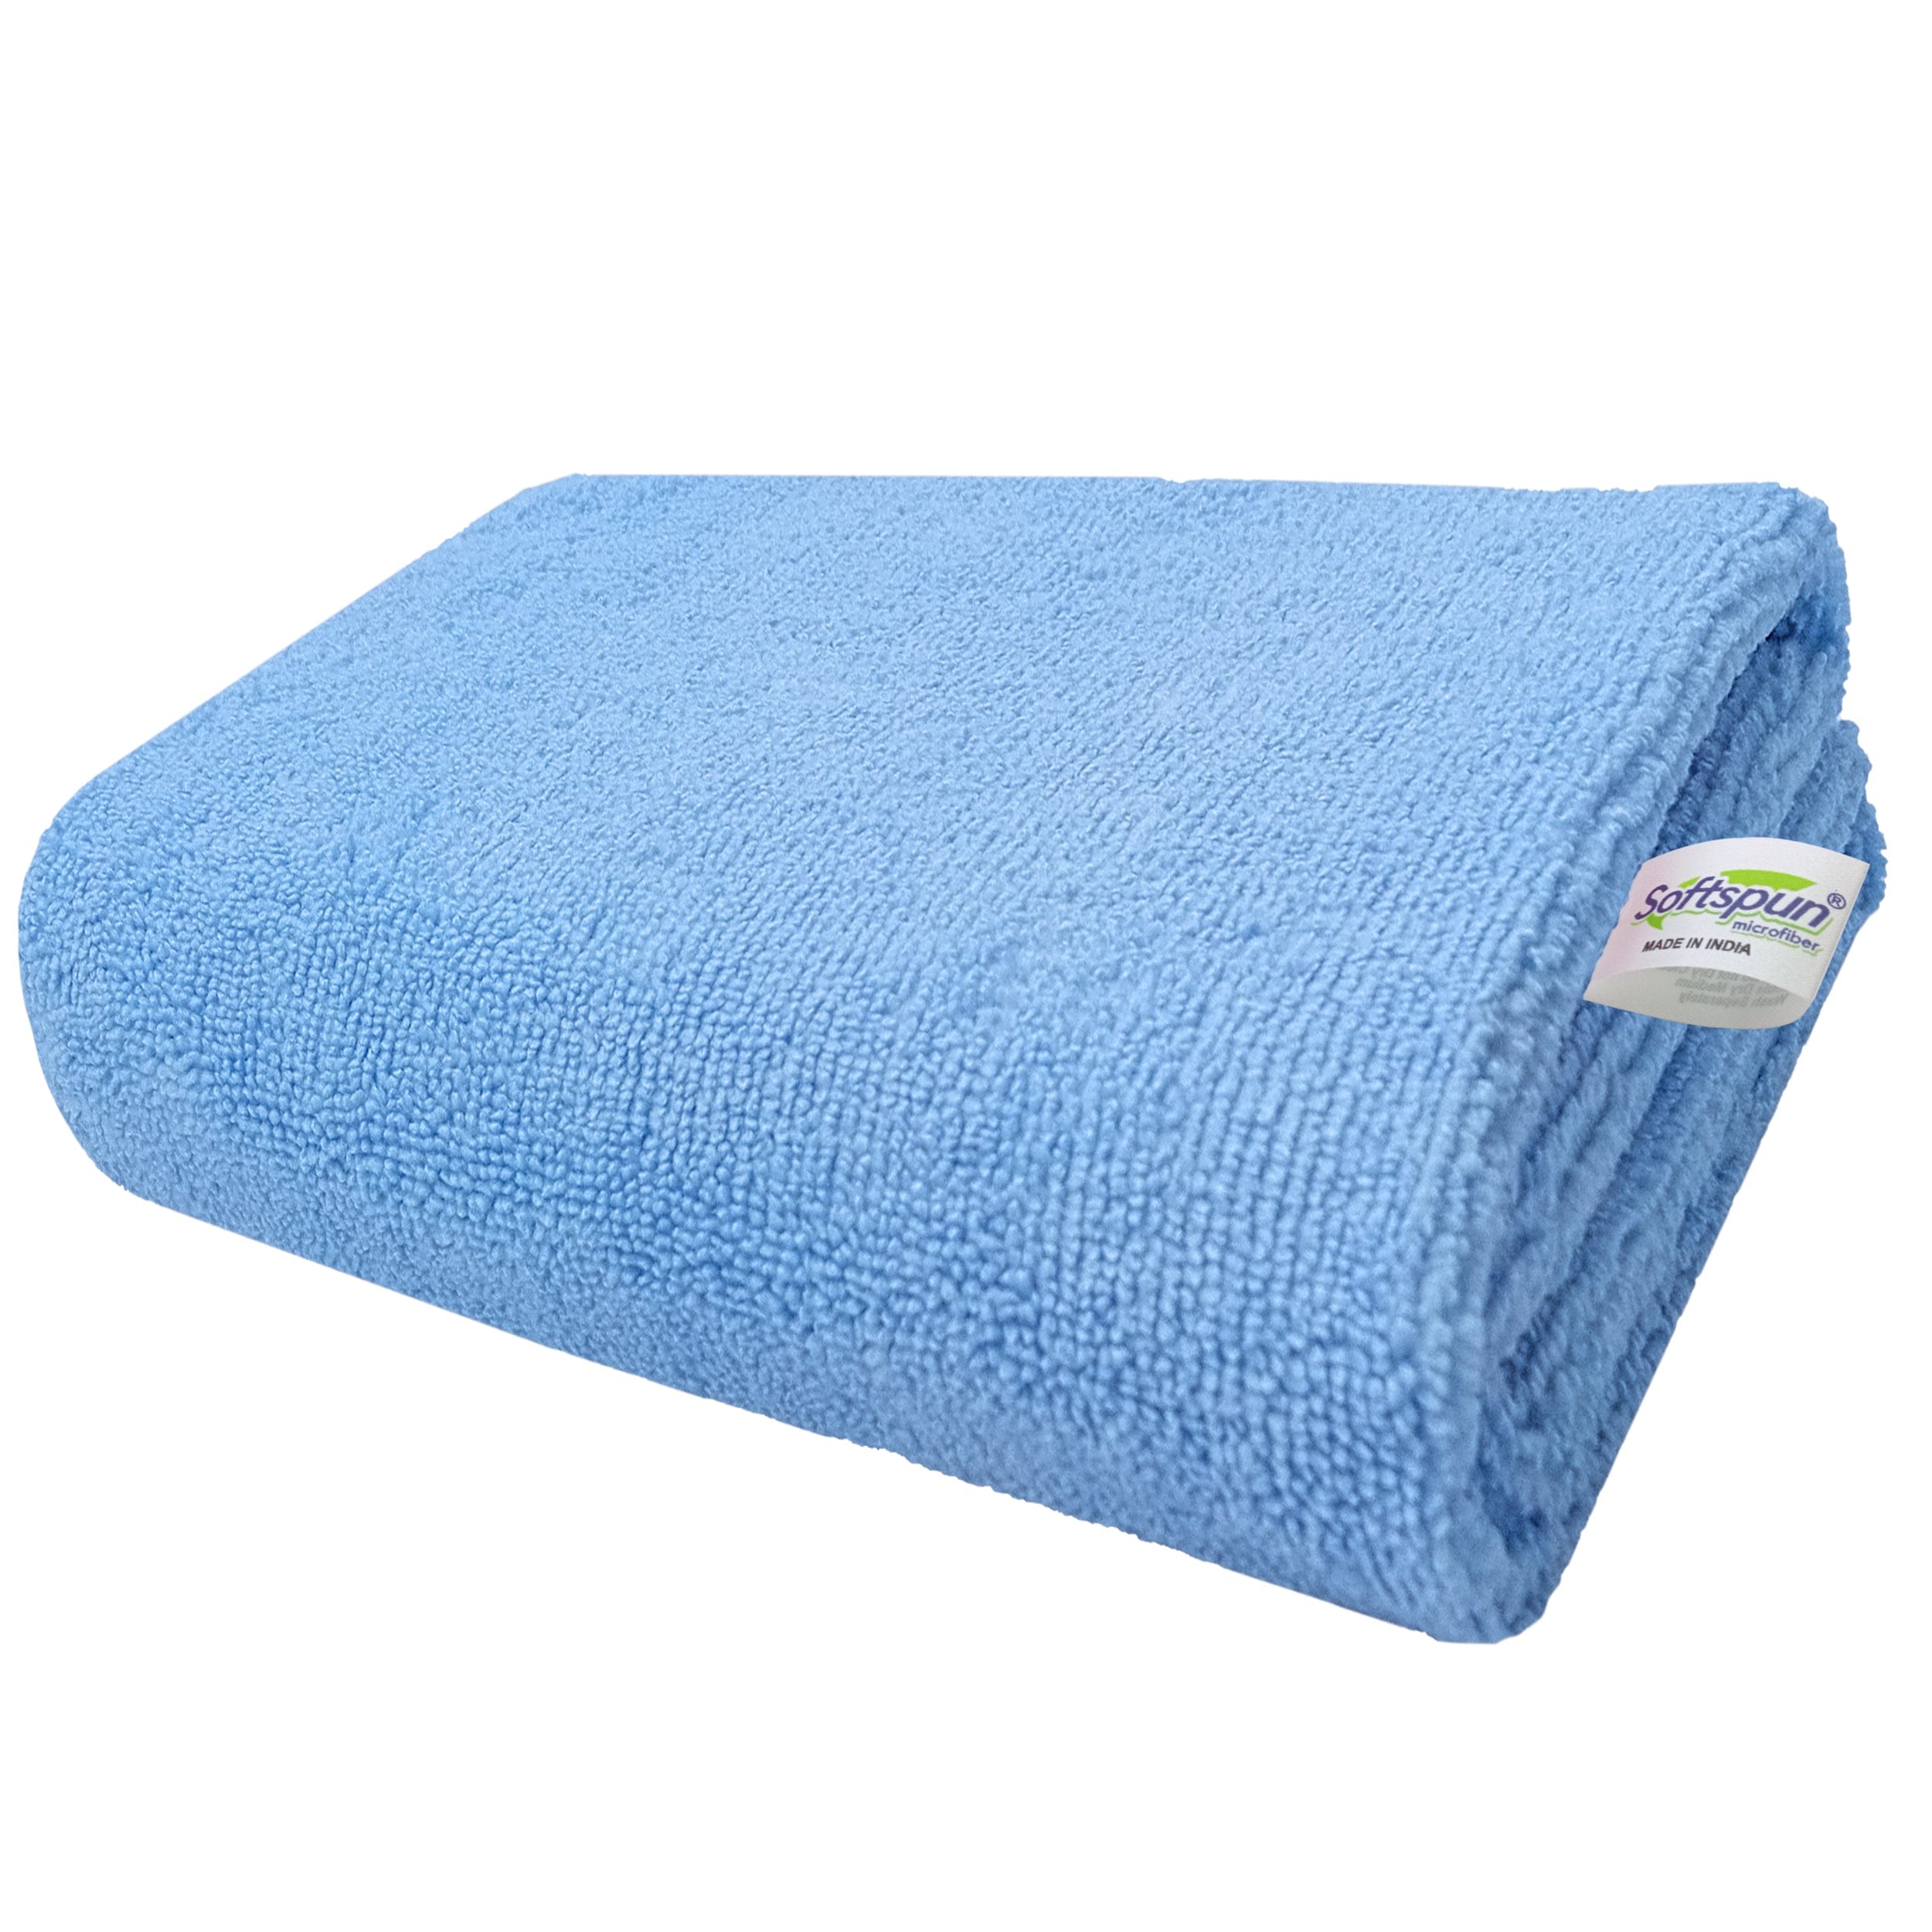 Microfiber Bath, Face & Hand Towels